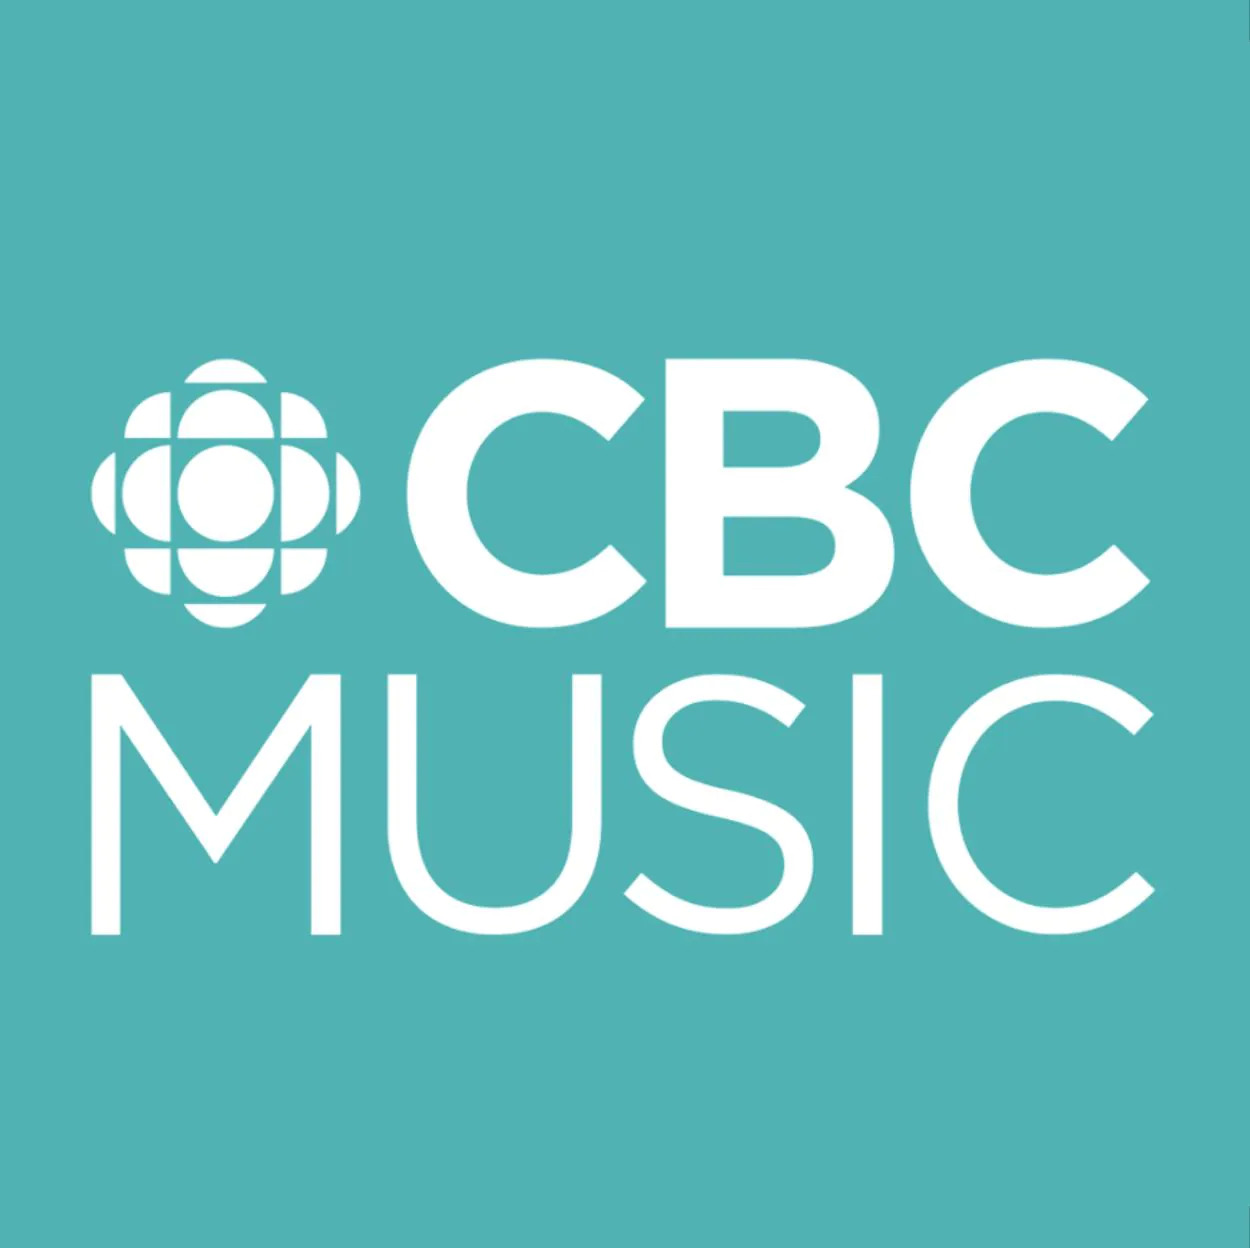 CBC Music logo.